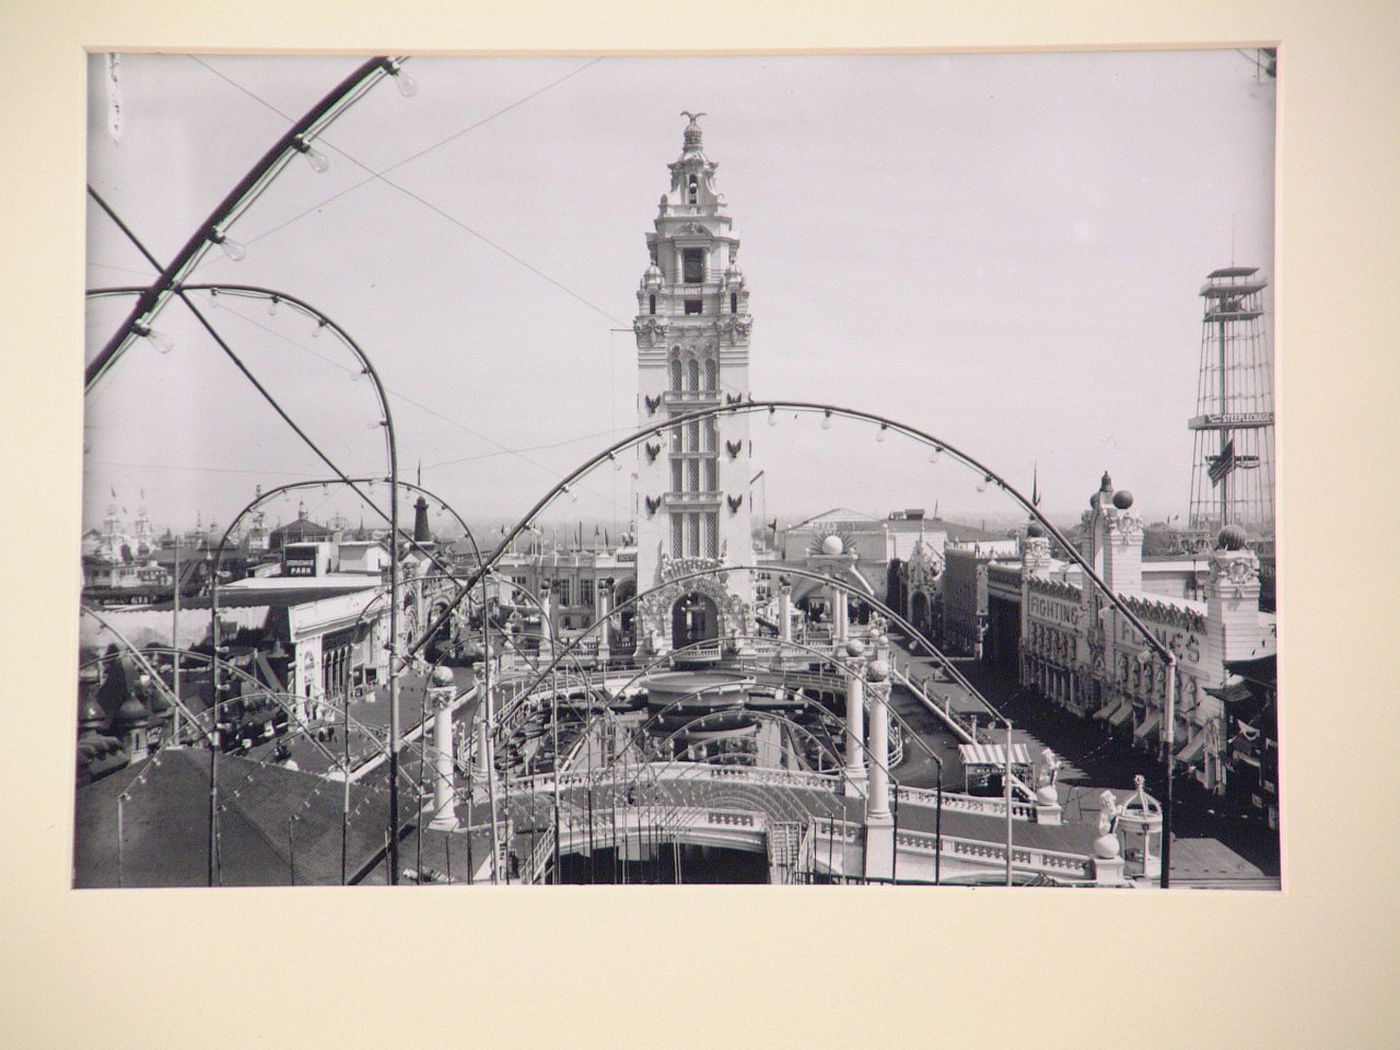 Coney Island - July 10, 1905: Dreamland from chutes